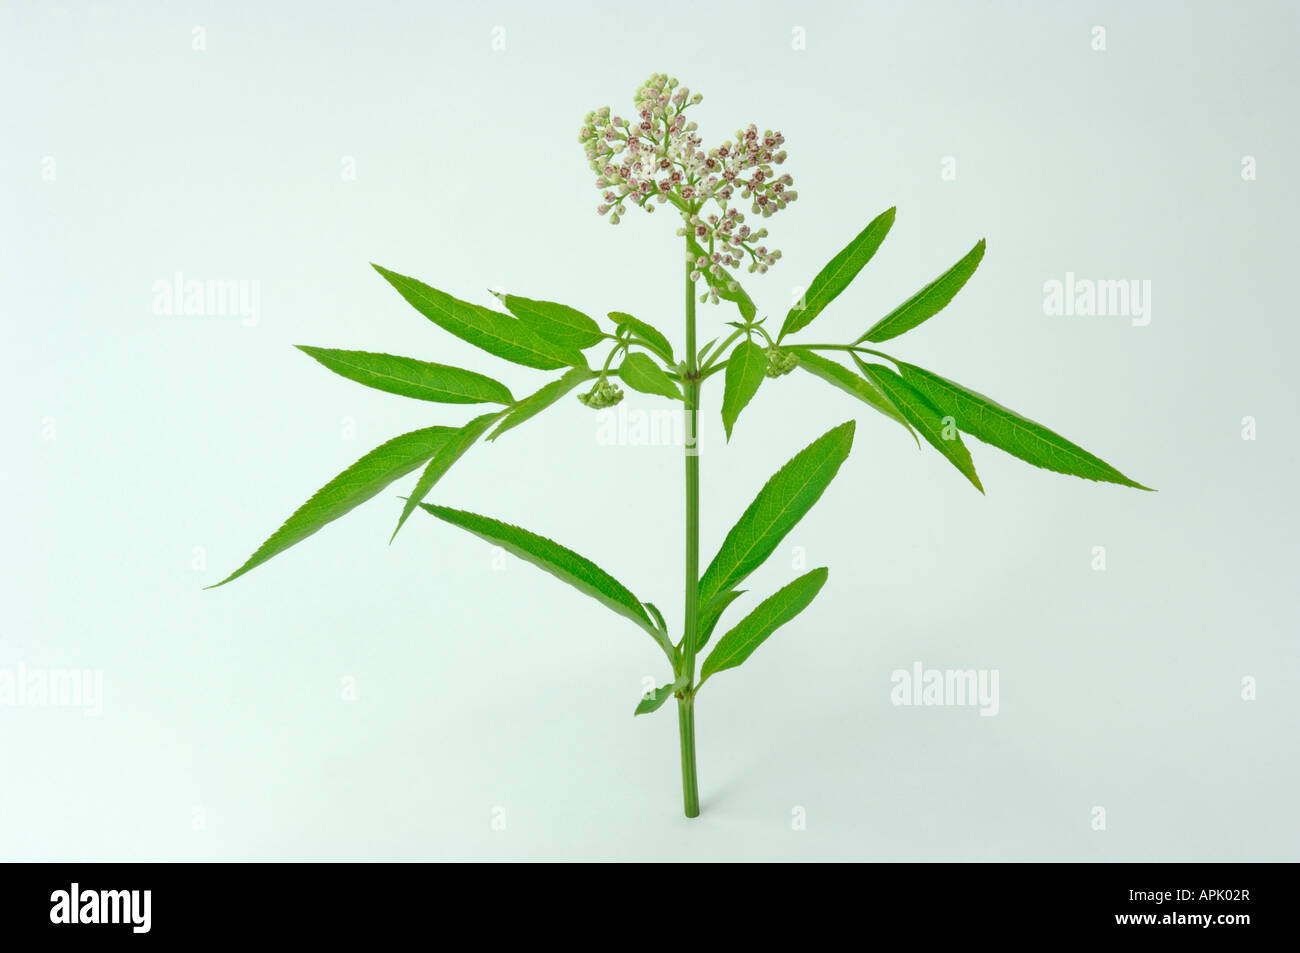 Danewort, Dwarf Elder, European Dwarf Elder, Walewort (Sambucus ebulus), flowering twig, studio picture Stock Photo